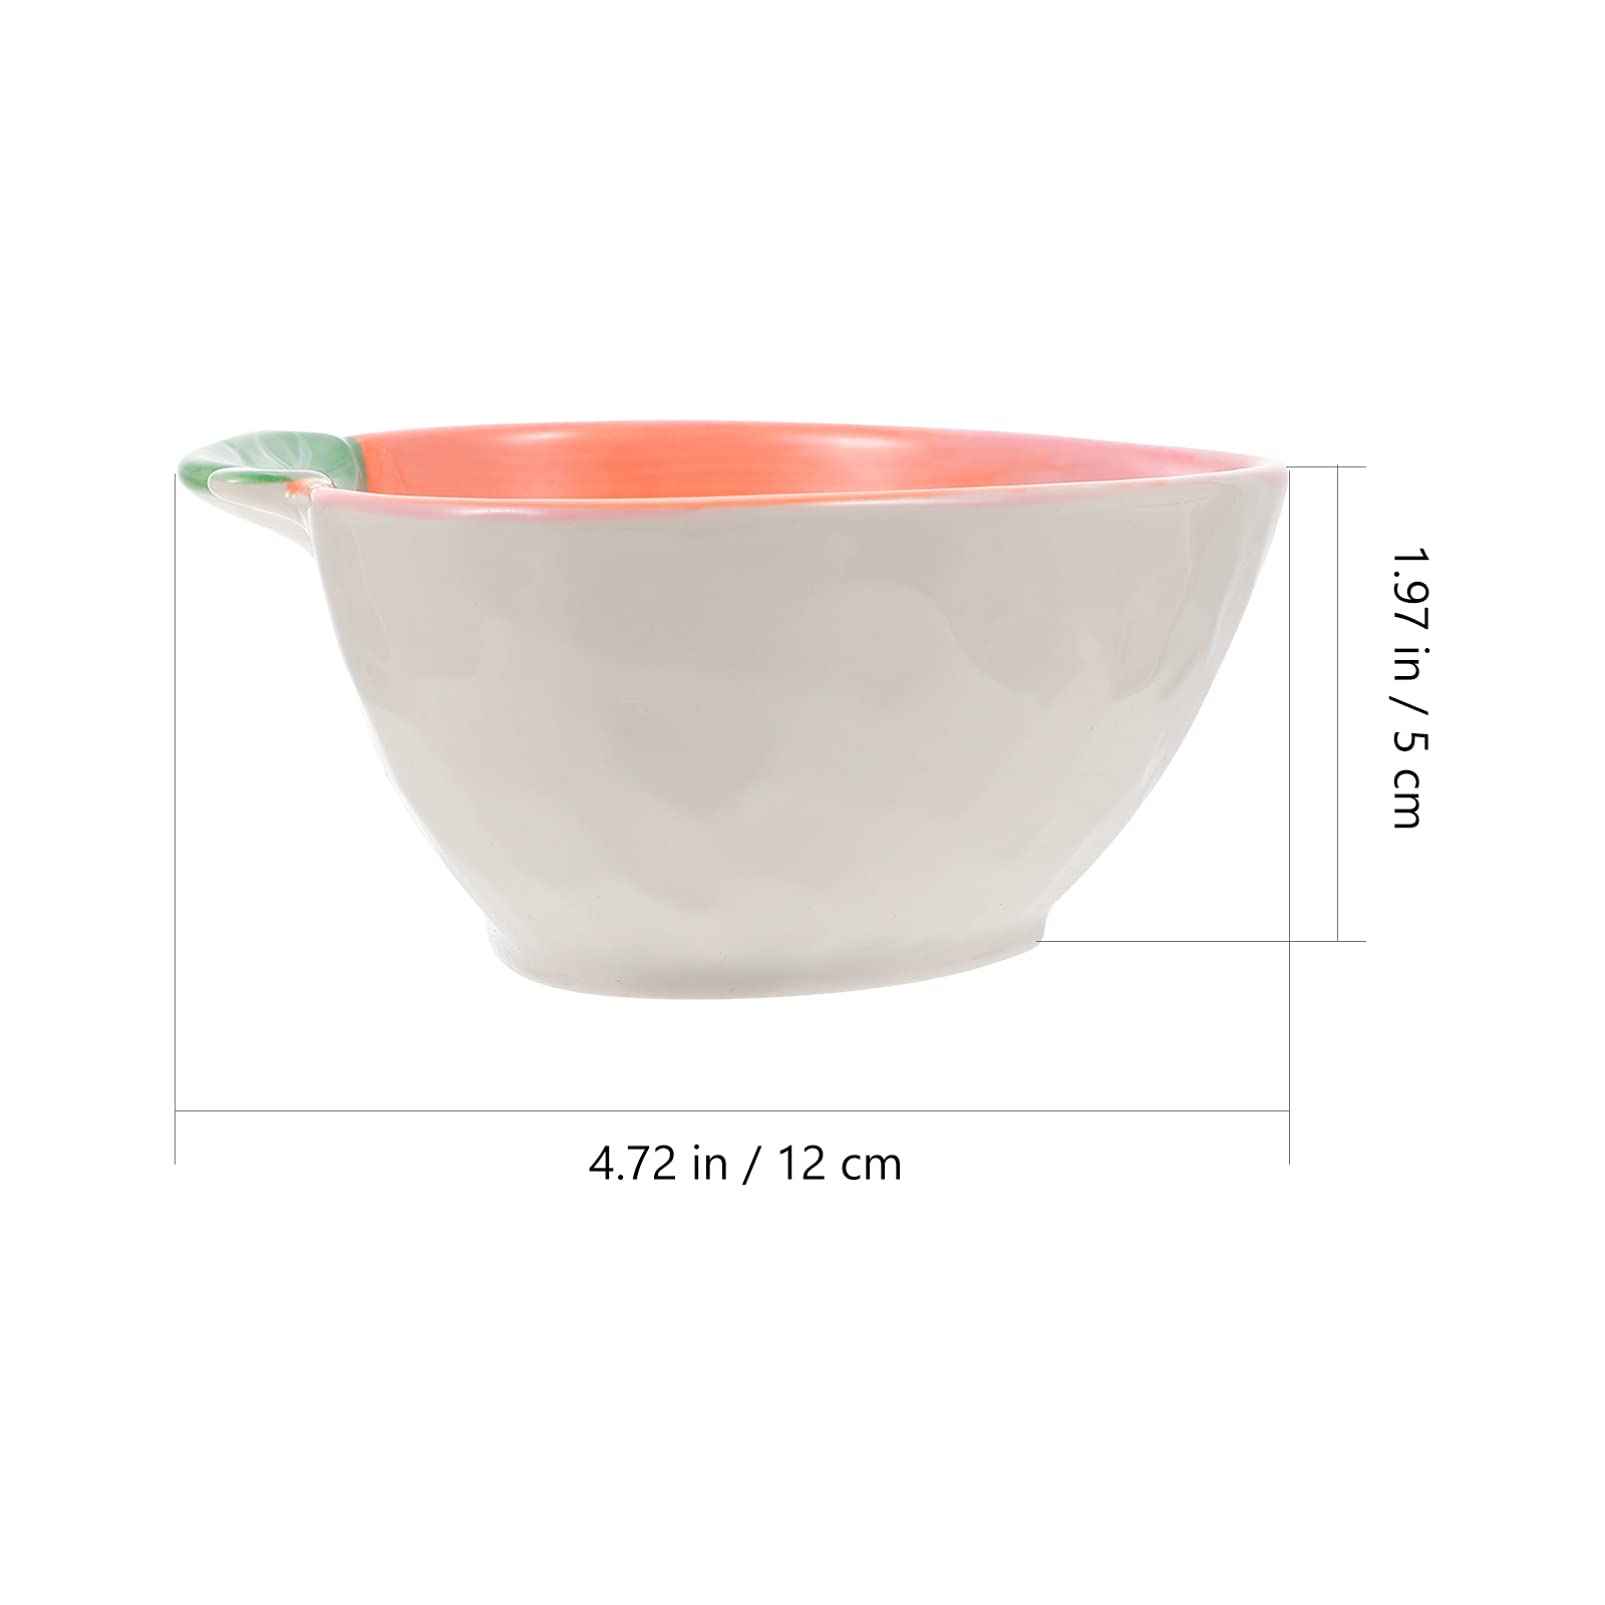 VOSAREA 5 Inches Decorative Half Peach Serving Fruit Salad Dessert Dish Bowl for Dipping Sauce Snacks Home Decor Meal Garnishing Fruit Vegetable Home Decor